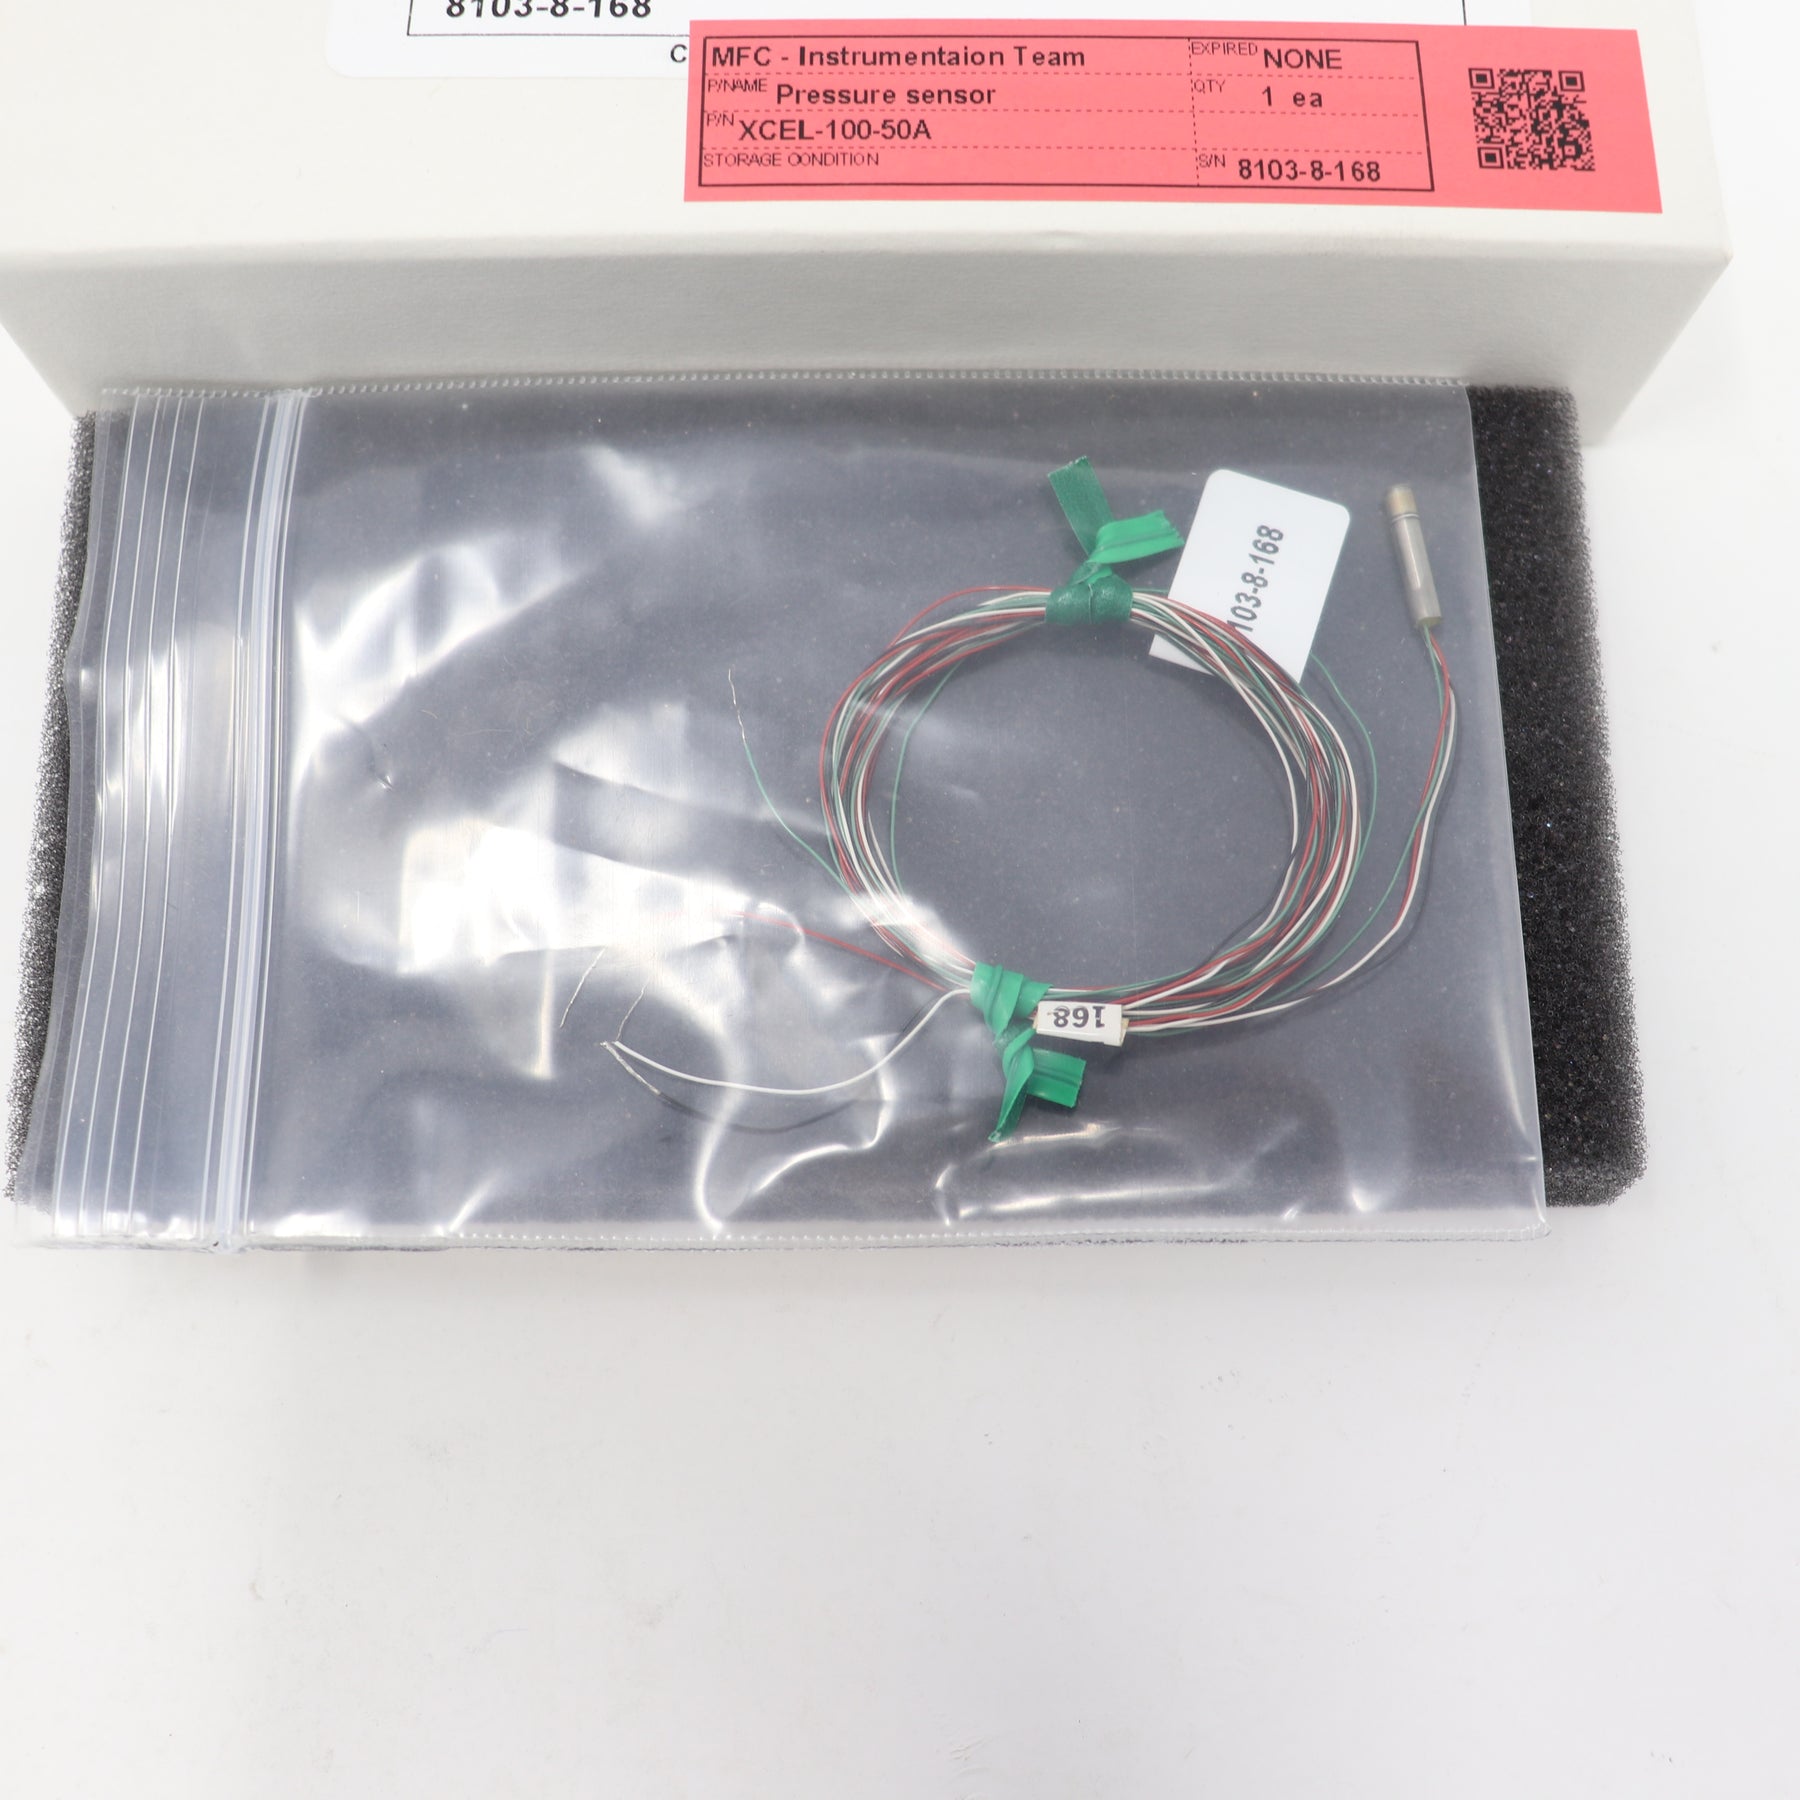 Kulite High Temperature Miniature Pressure/ Sensor Transducer XCEL-100-50A